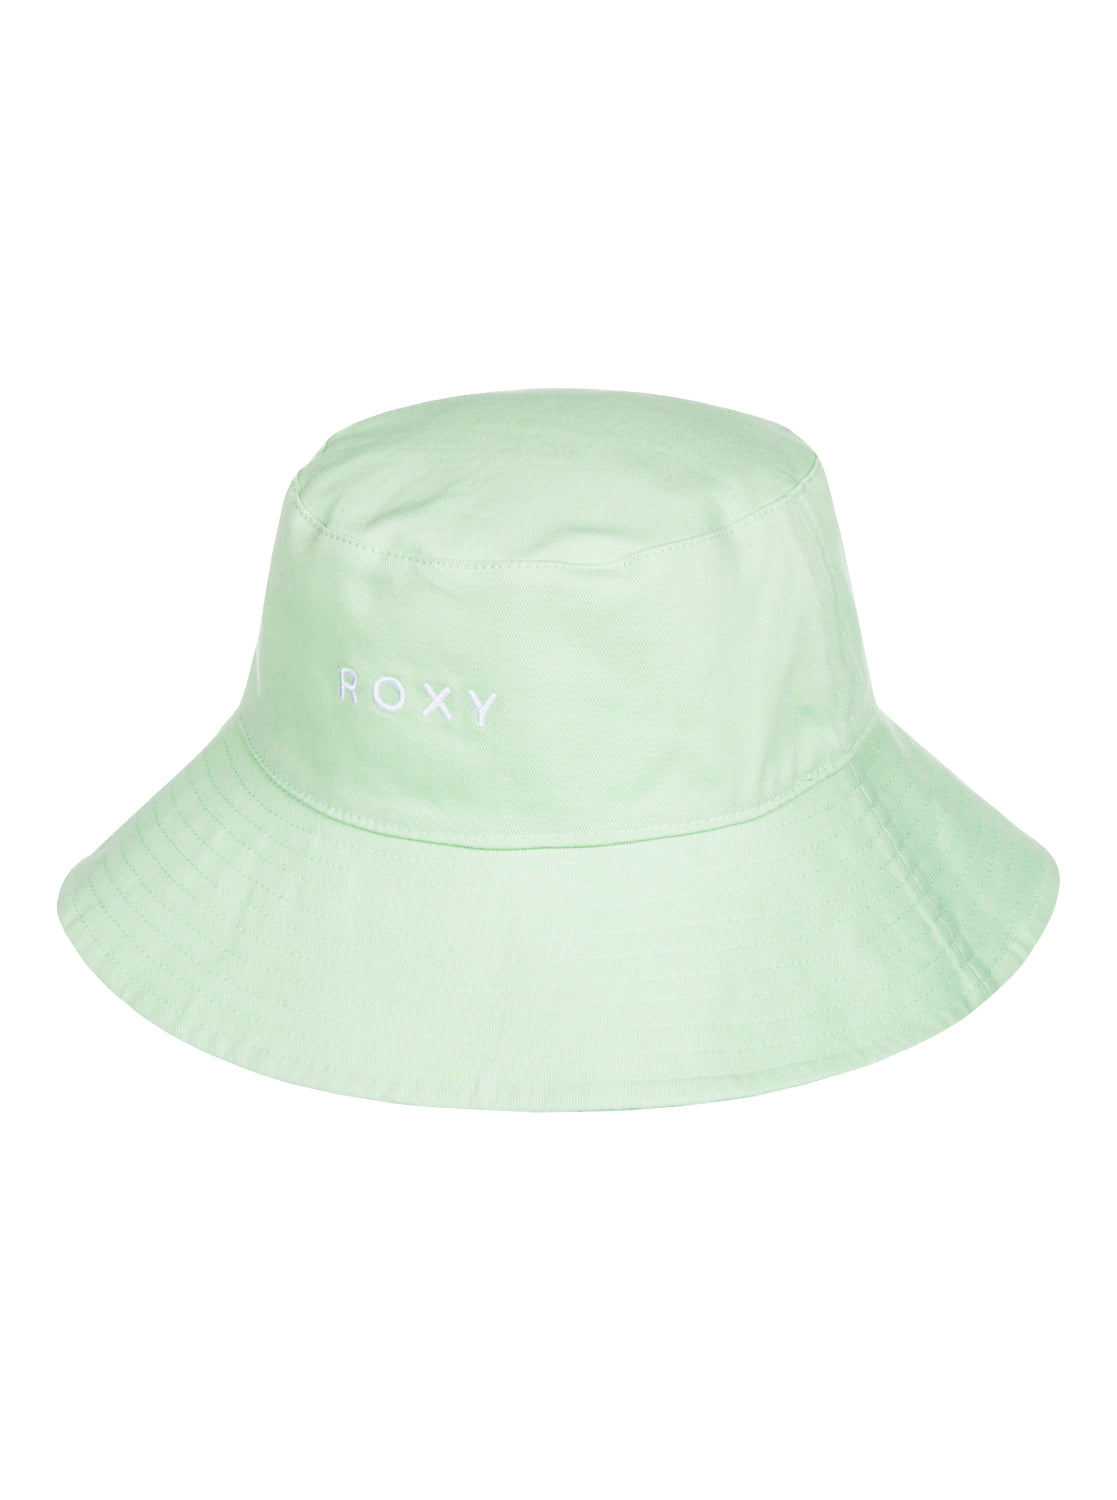 Roxy Aloha Sunshine Printed Bucket Hat  GFE6-Spruce S/M